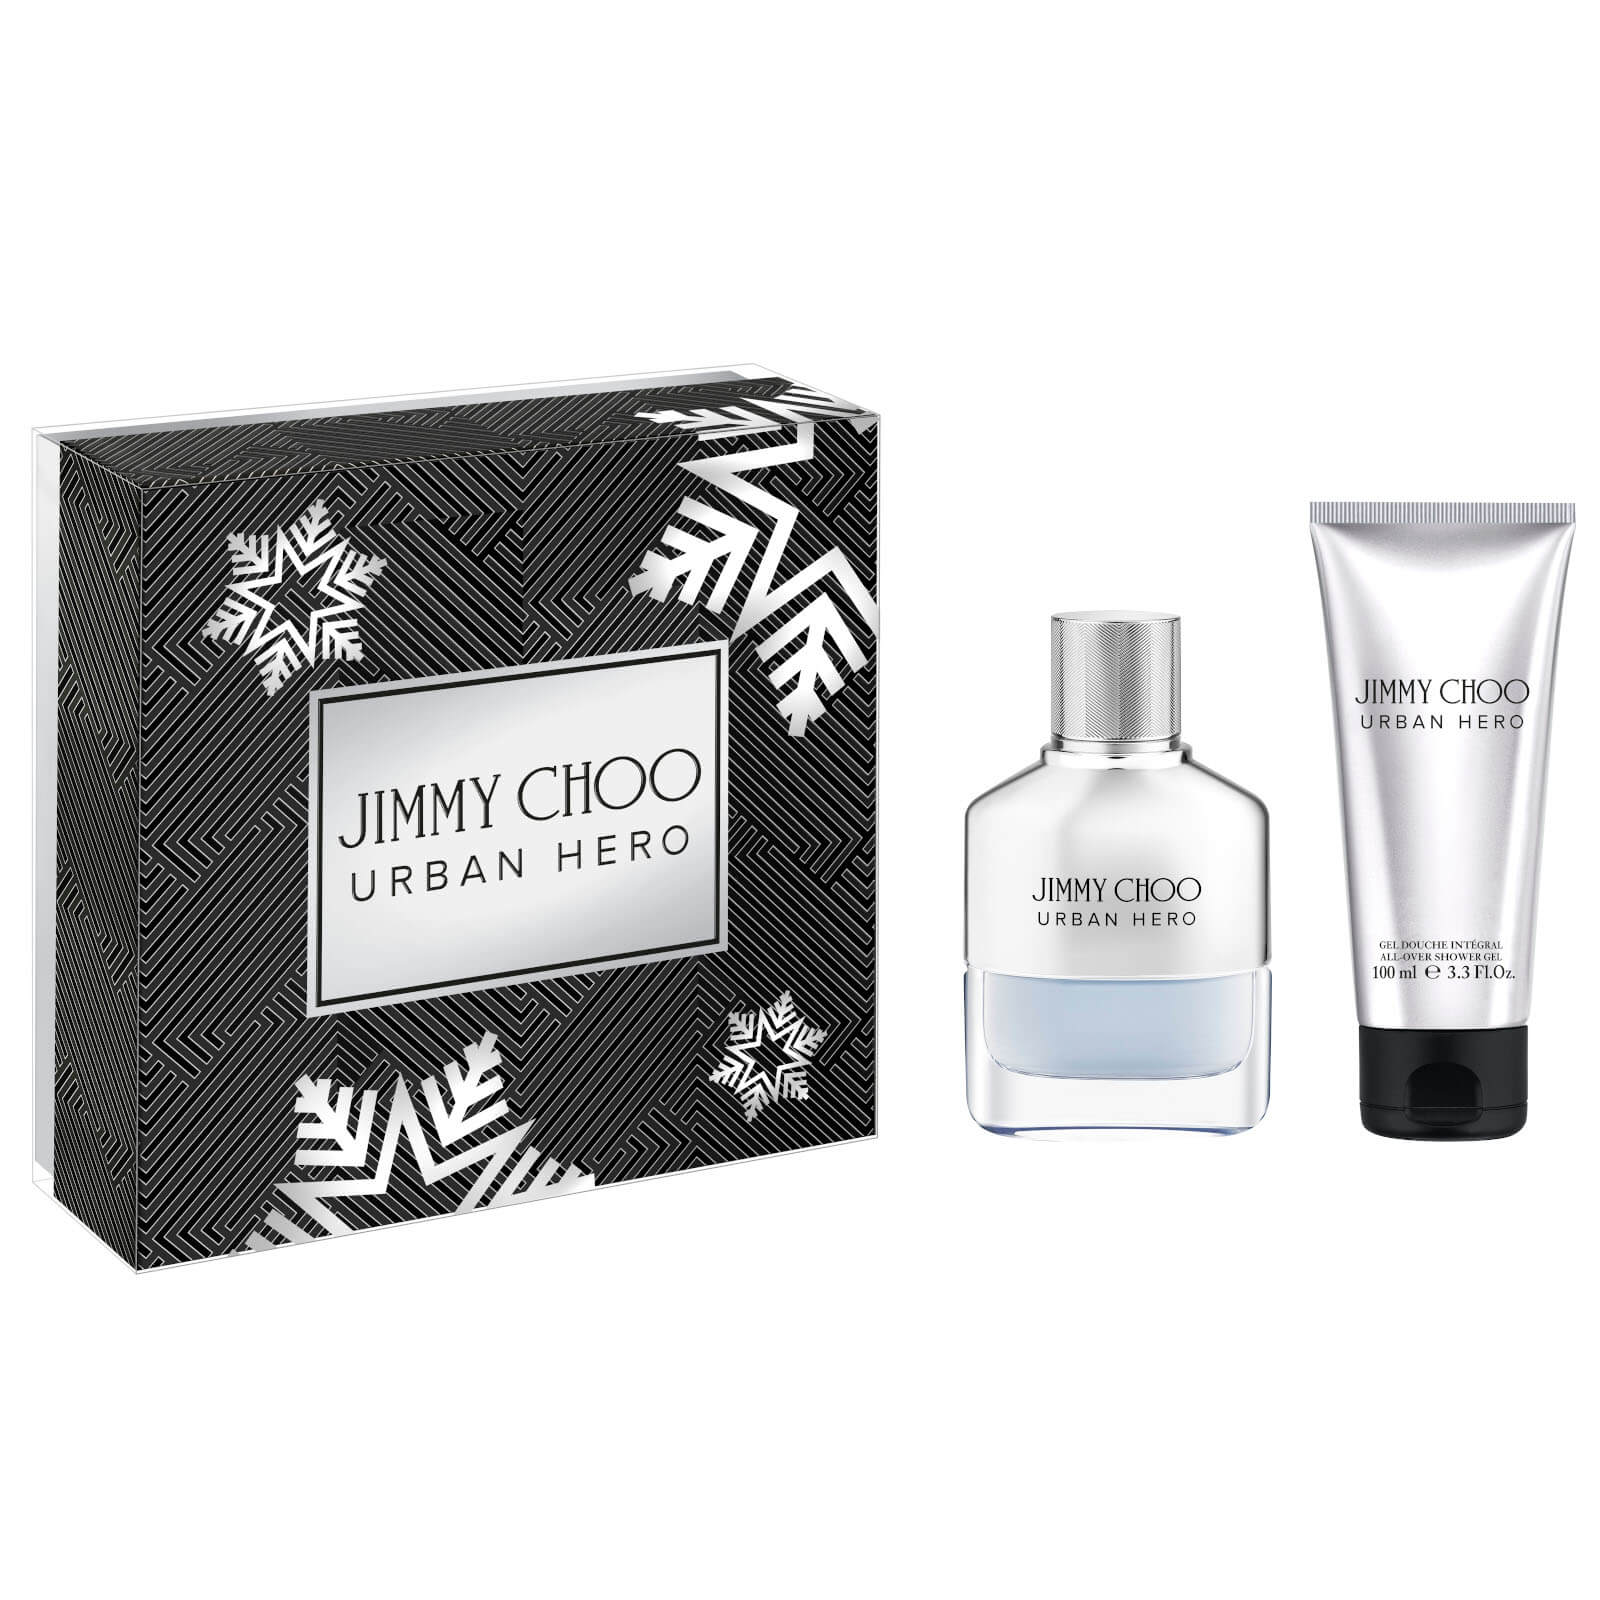 Jimmy Choo Urban Hero Eau de Parfum and Shower Gel Set (Worth £62.00)